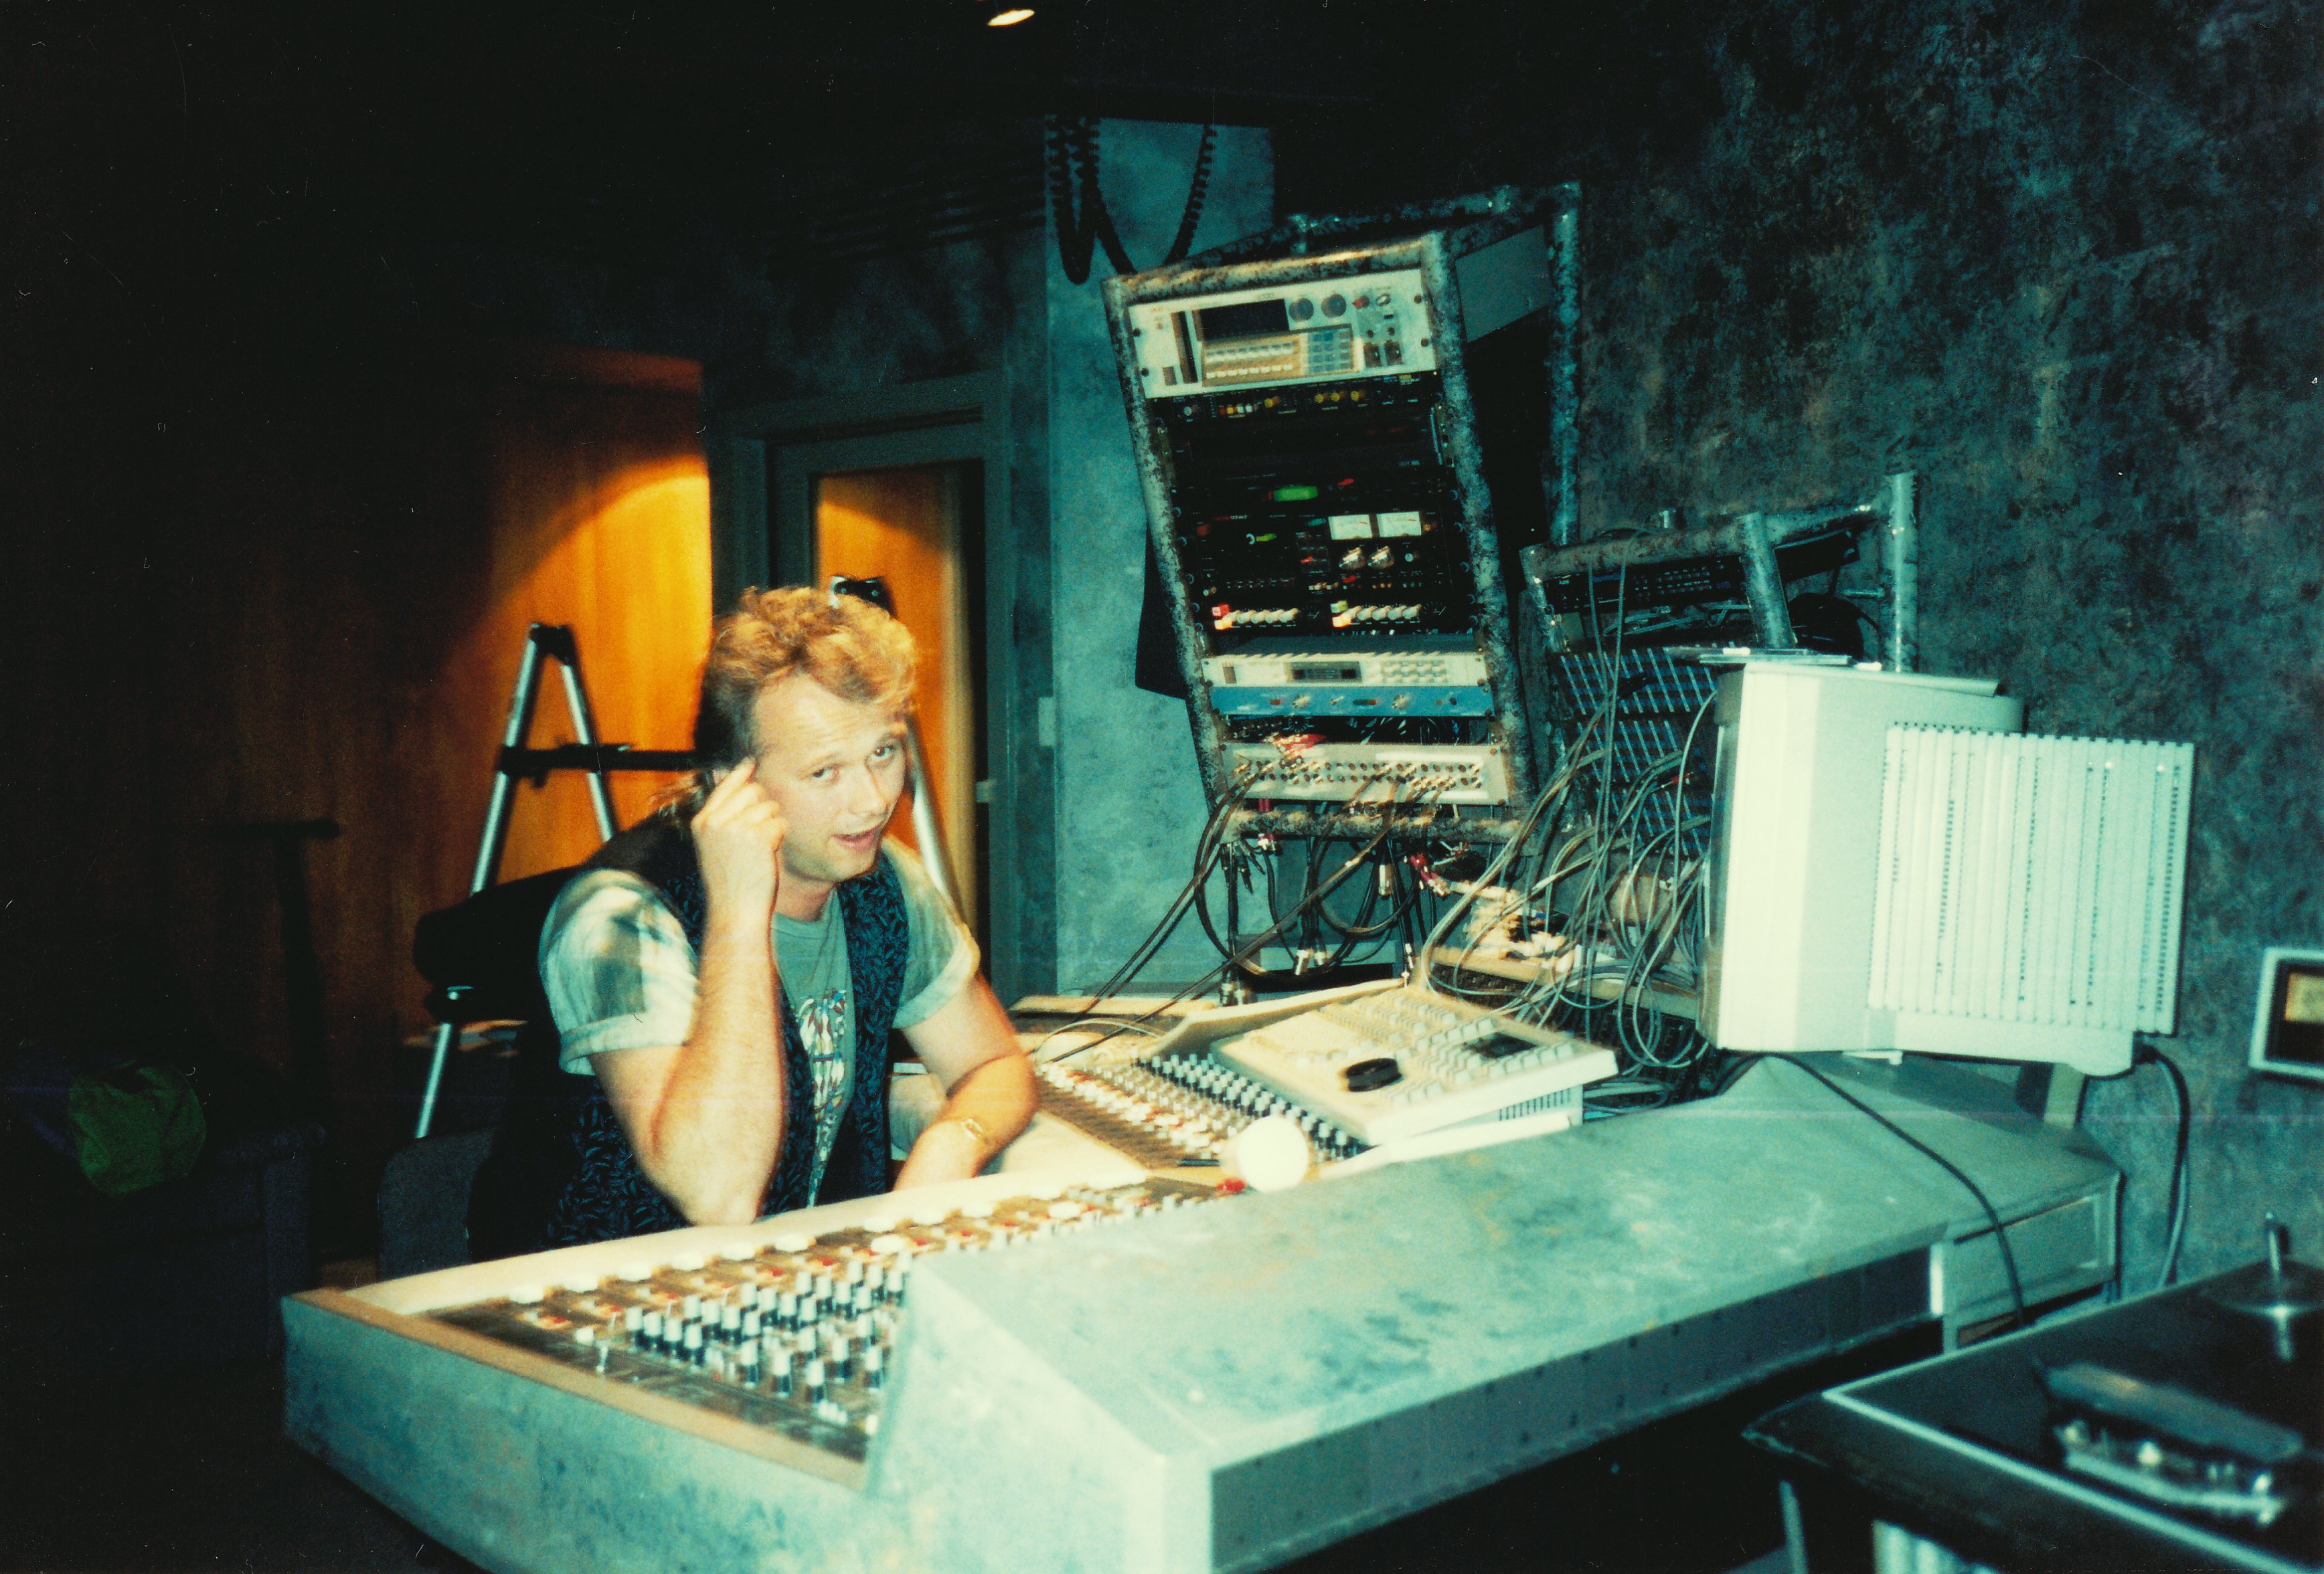 Dave Long 'Sahara' in Metropolis Recording Studios Melbourne